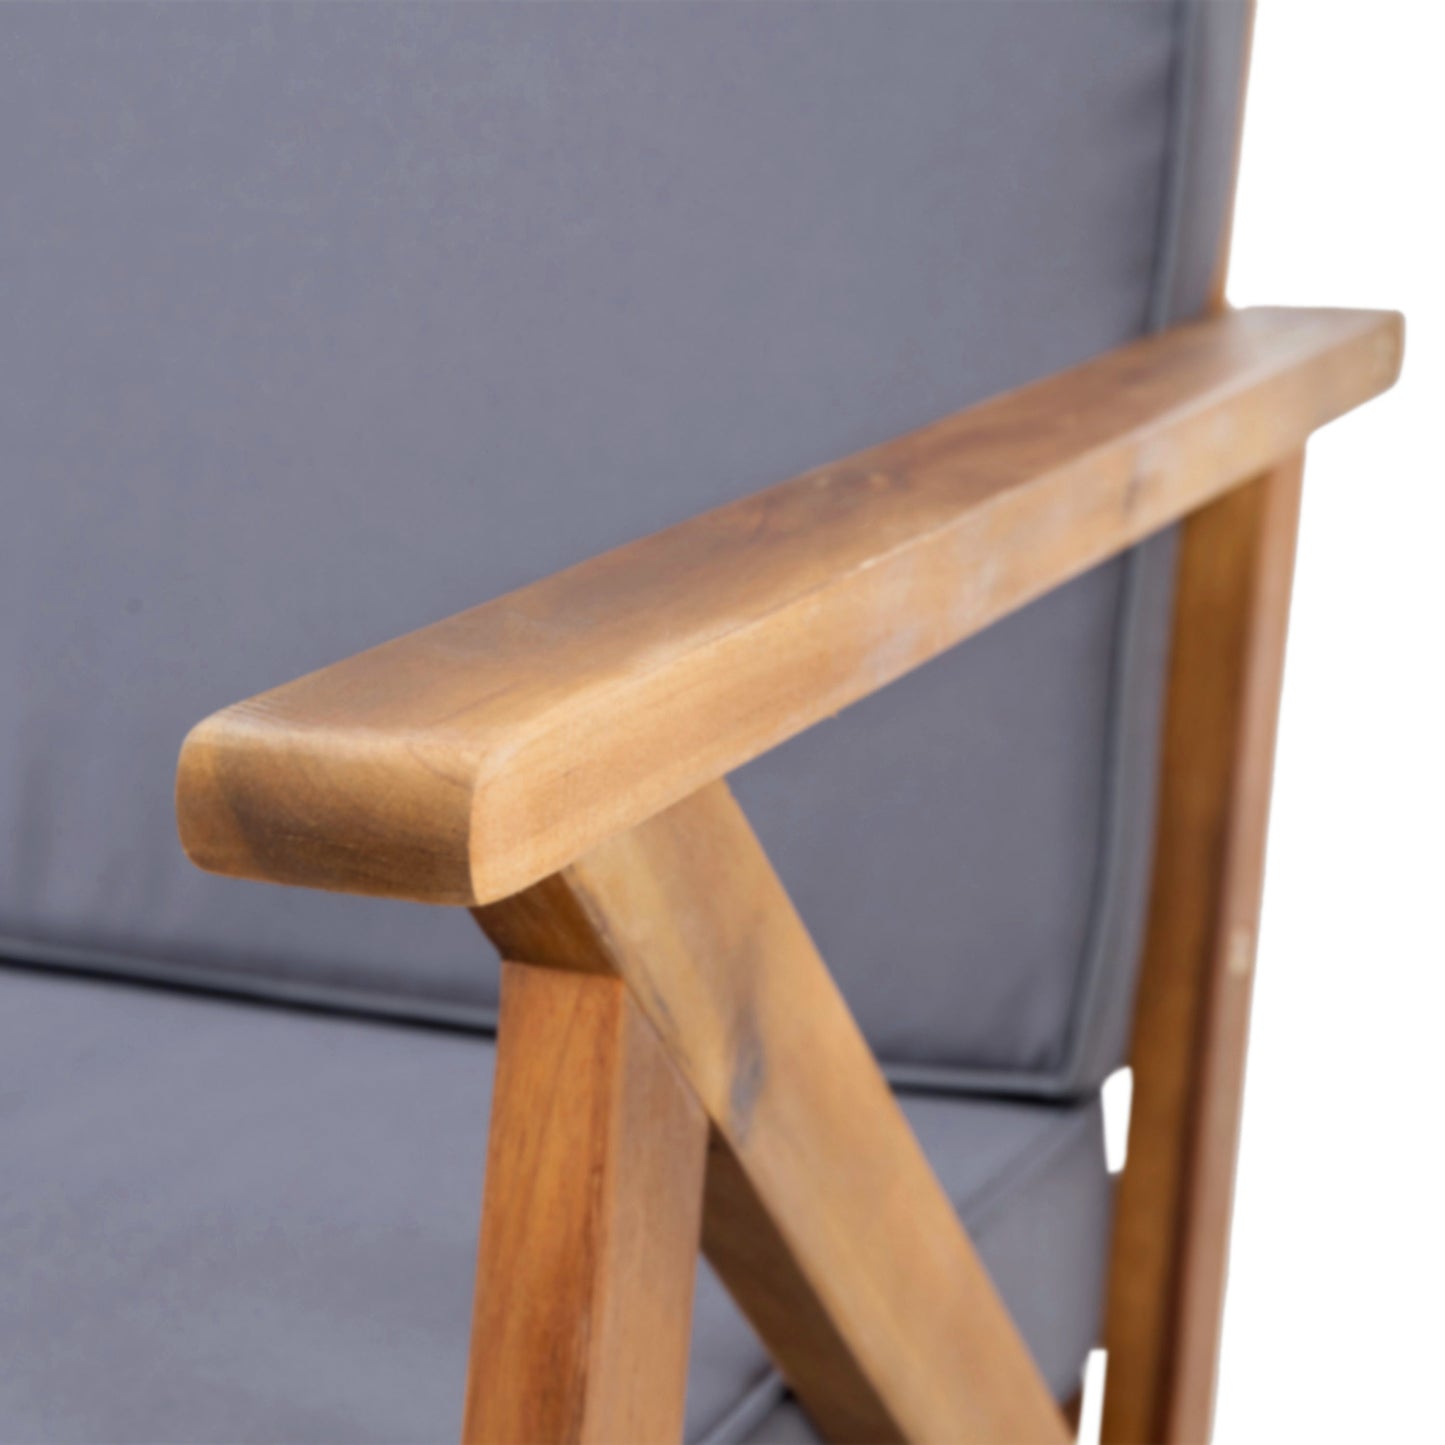 Manarola 4 Pc Outdoor Natural Wood Finish Chat Set w/ Water Resistant Cushion